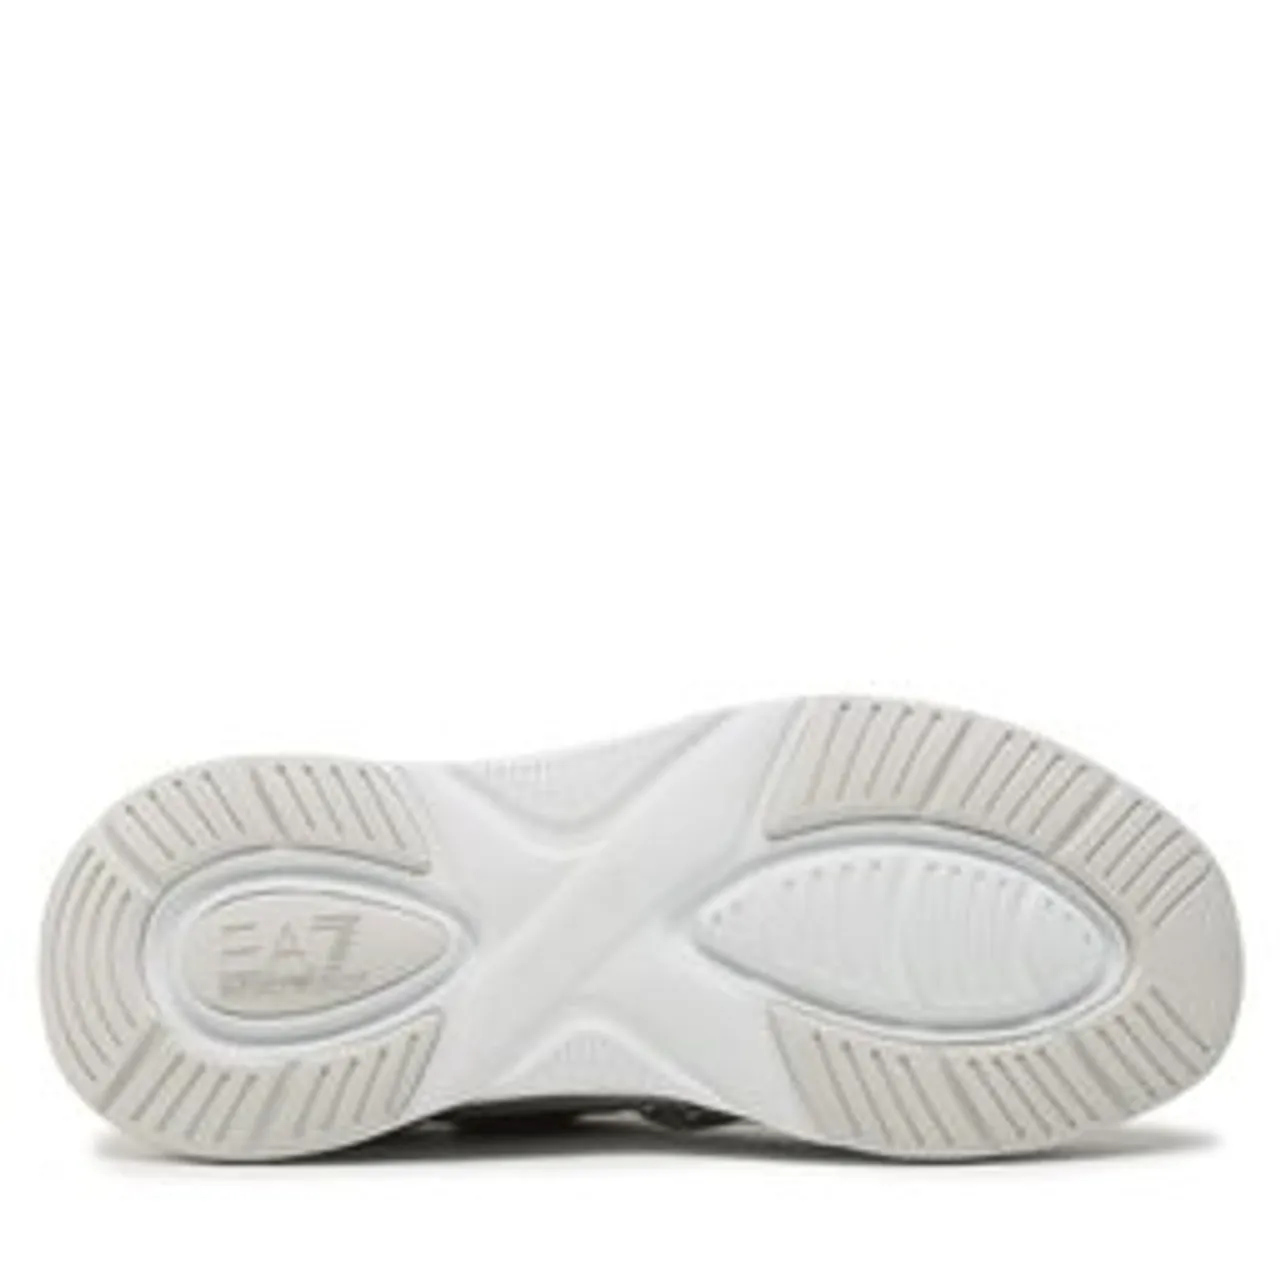 Sneakers EA7 Emporio Armani X8X087 XK227 S320 Oyster Mushro/White